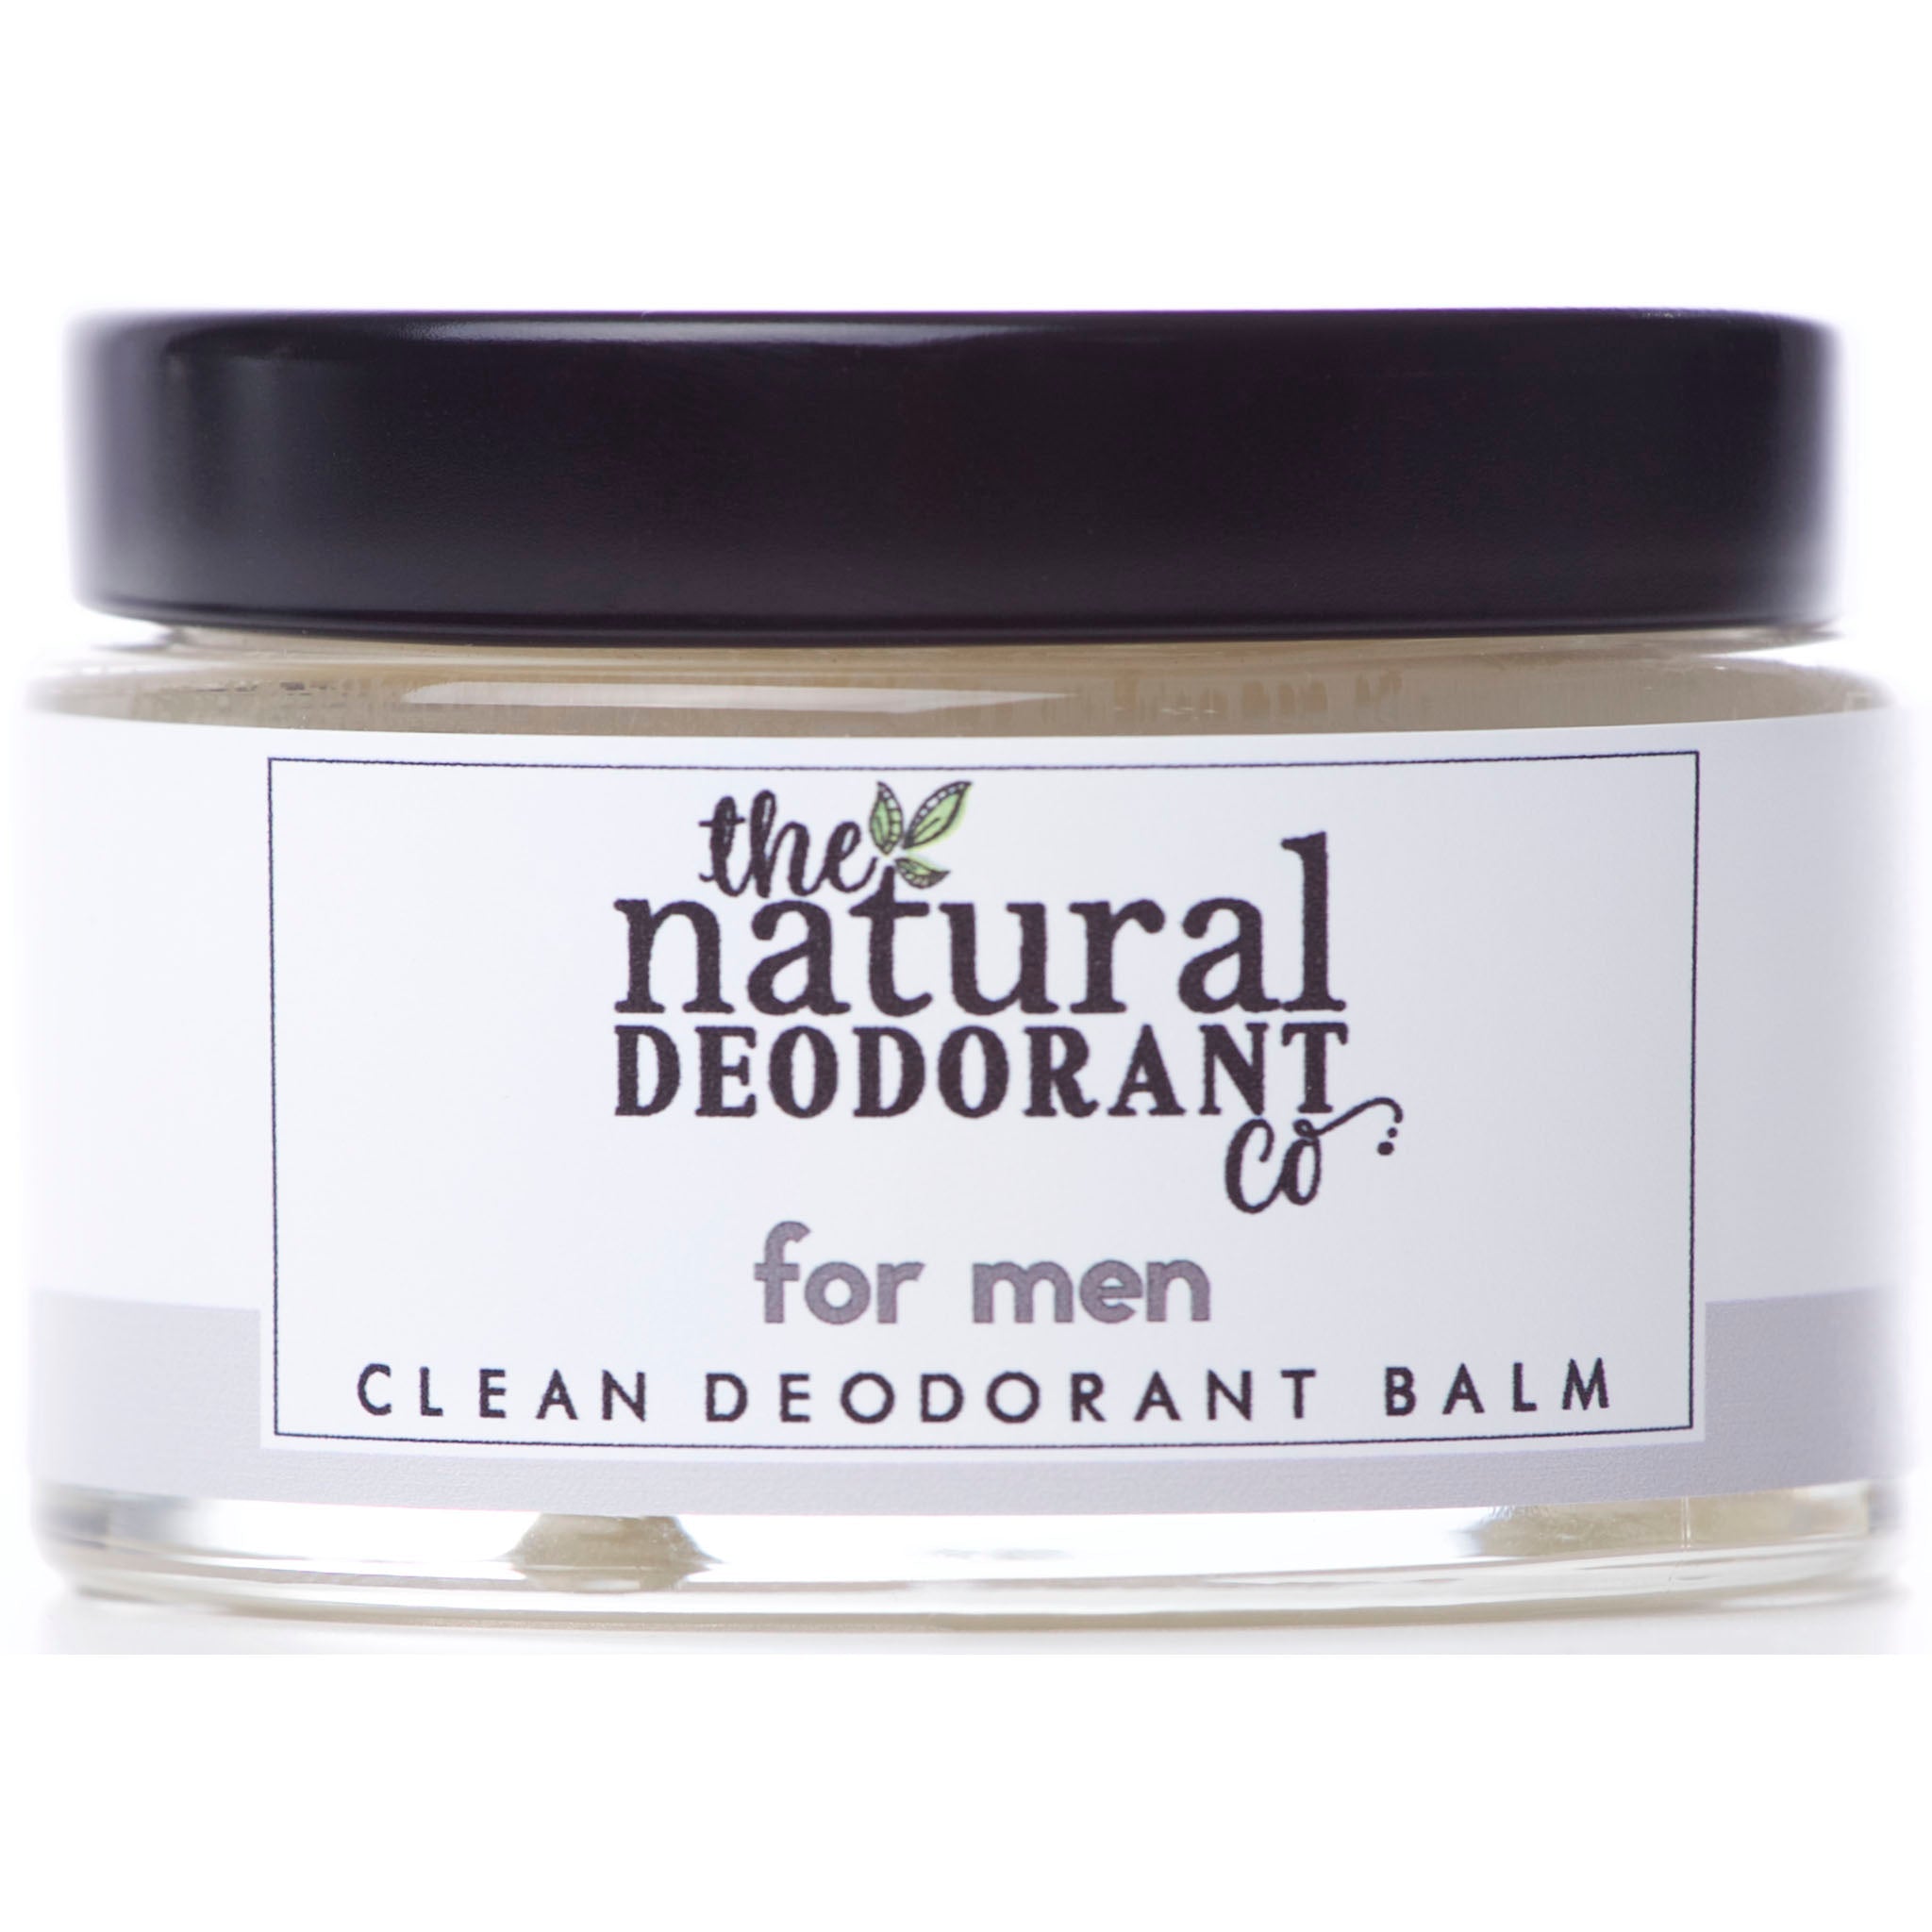 Clean Deodorant Balm | for Men